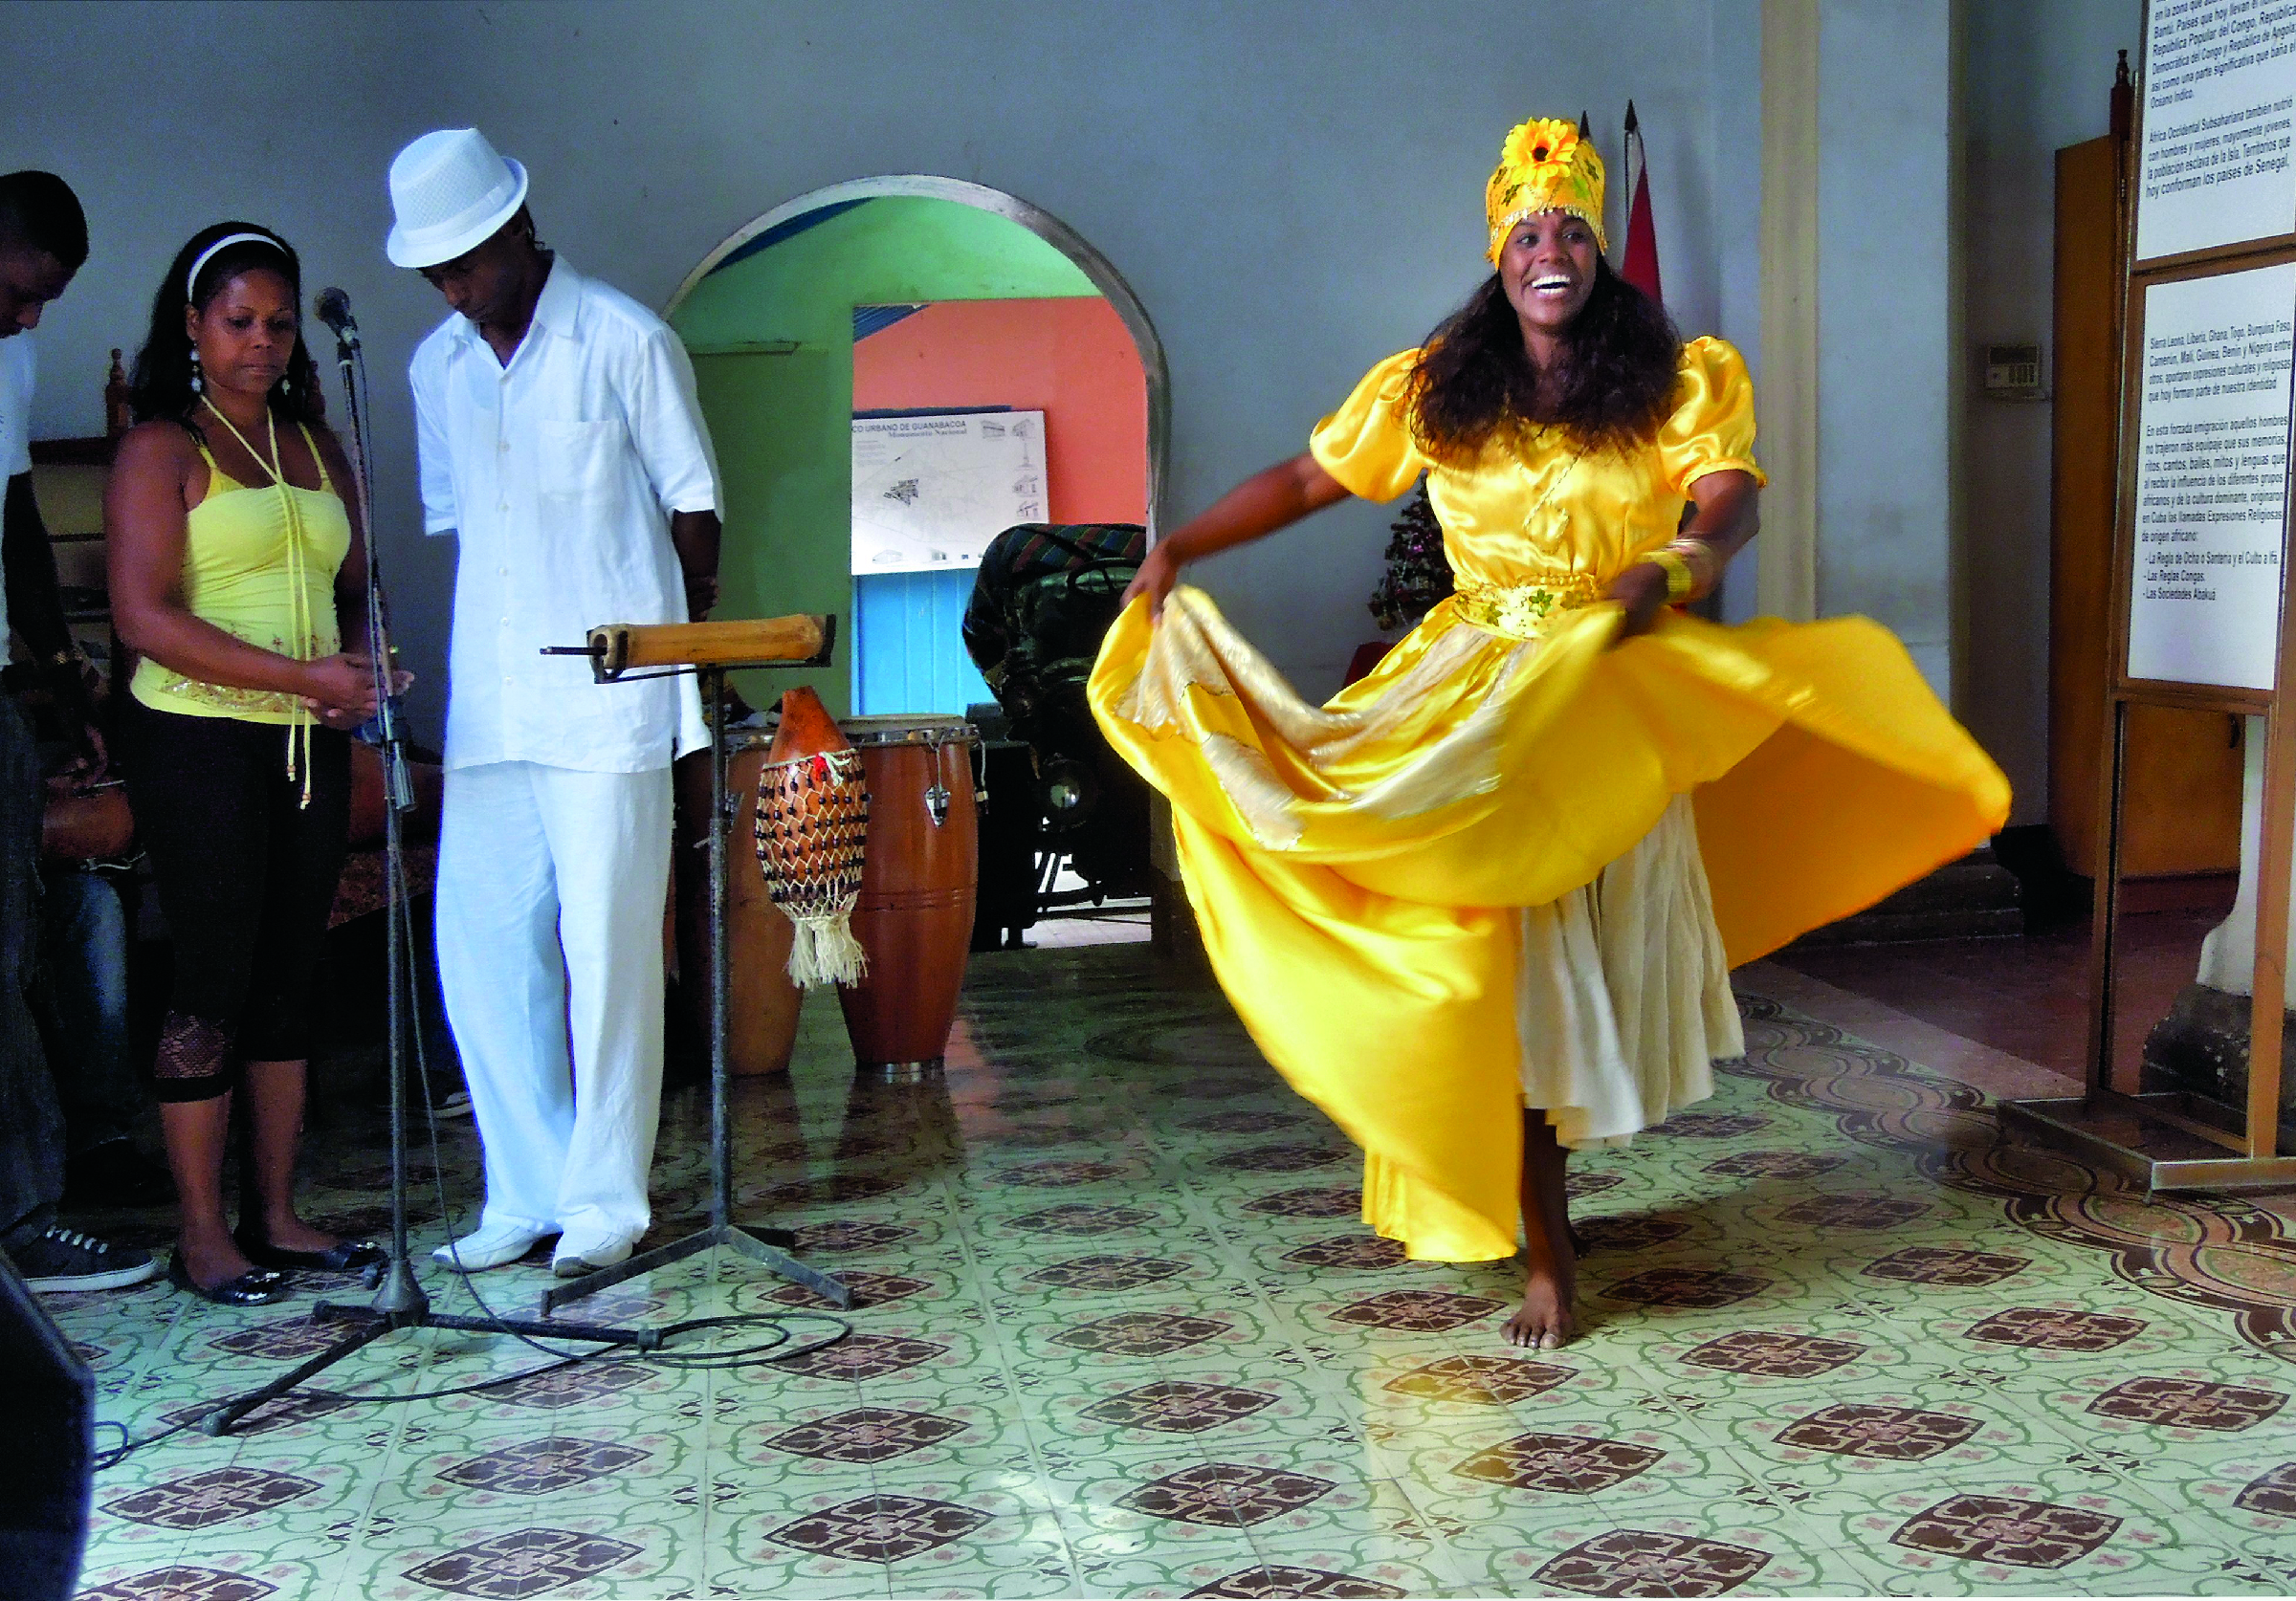 Understanding Santería and Afro-Cuban spiritual traditions